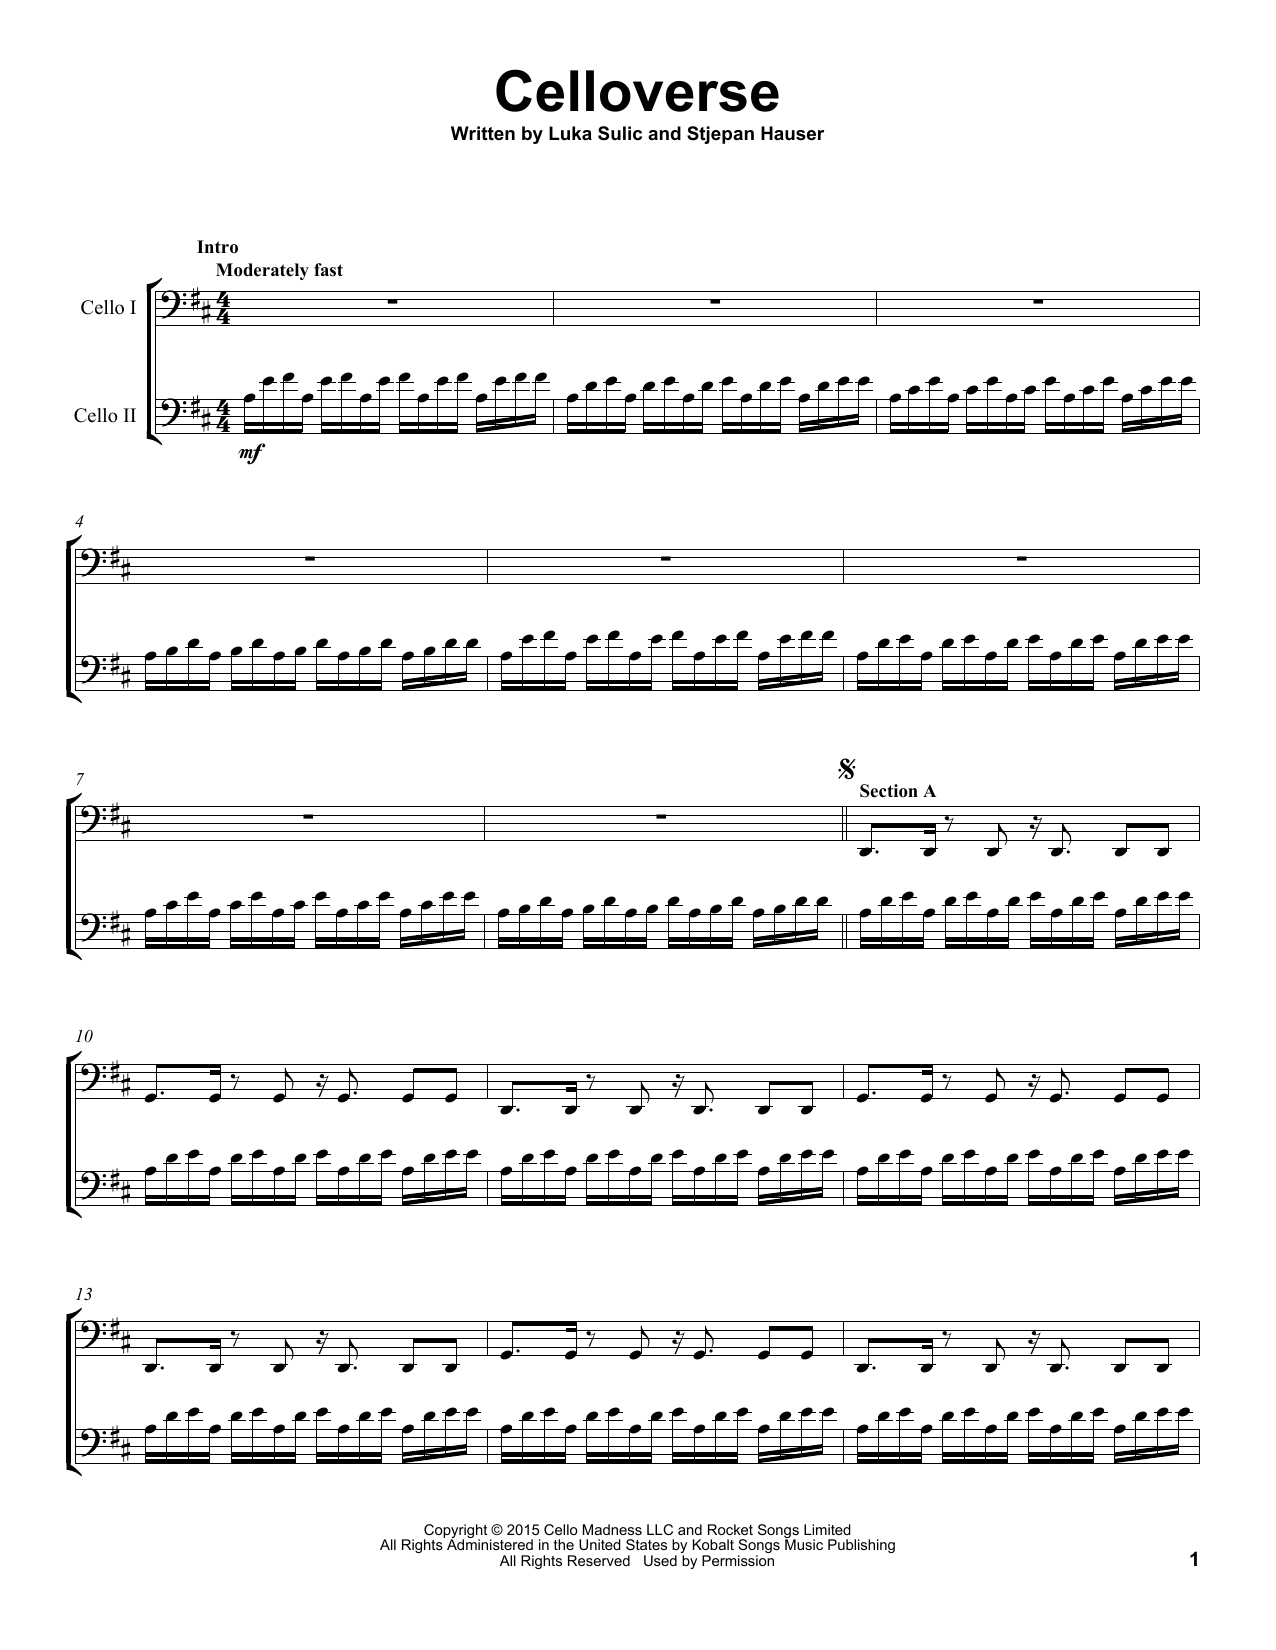 2Cellos Celloverse Sheet Music Notes & Chords for Cello Duet - Download or Print PDF